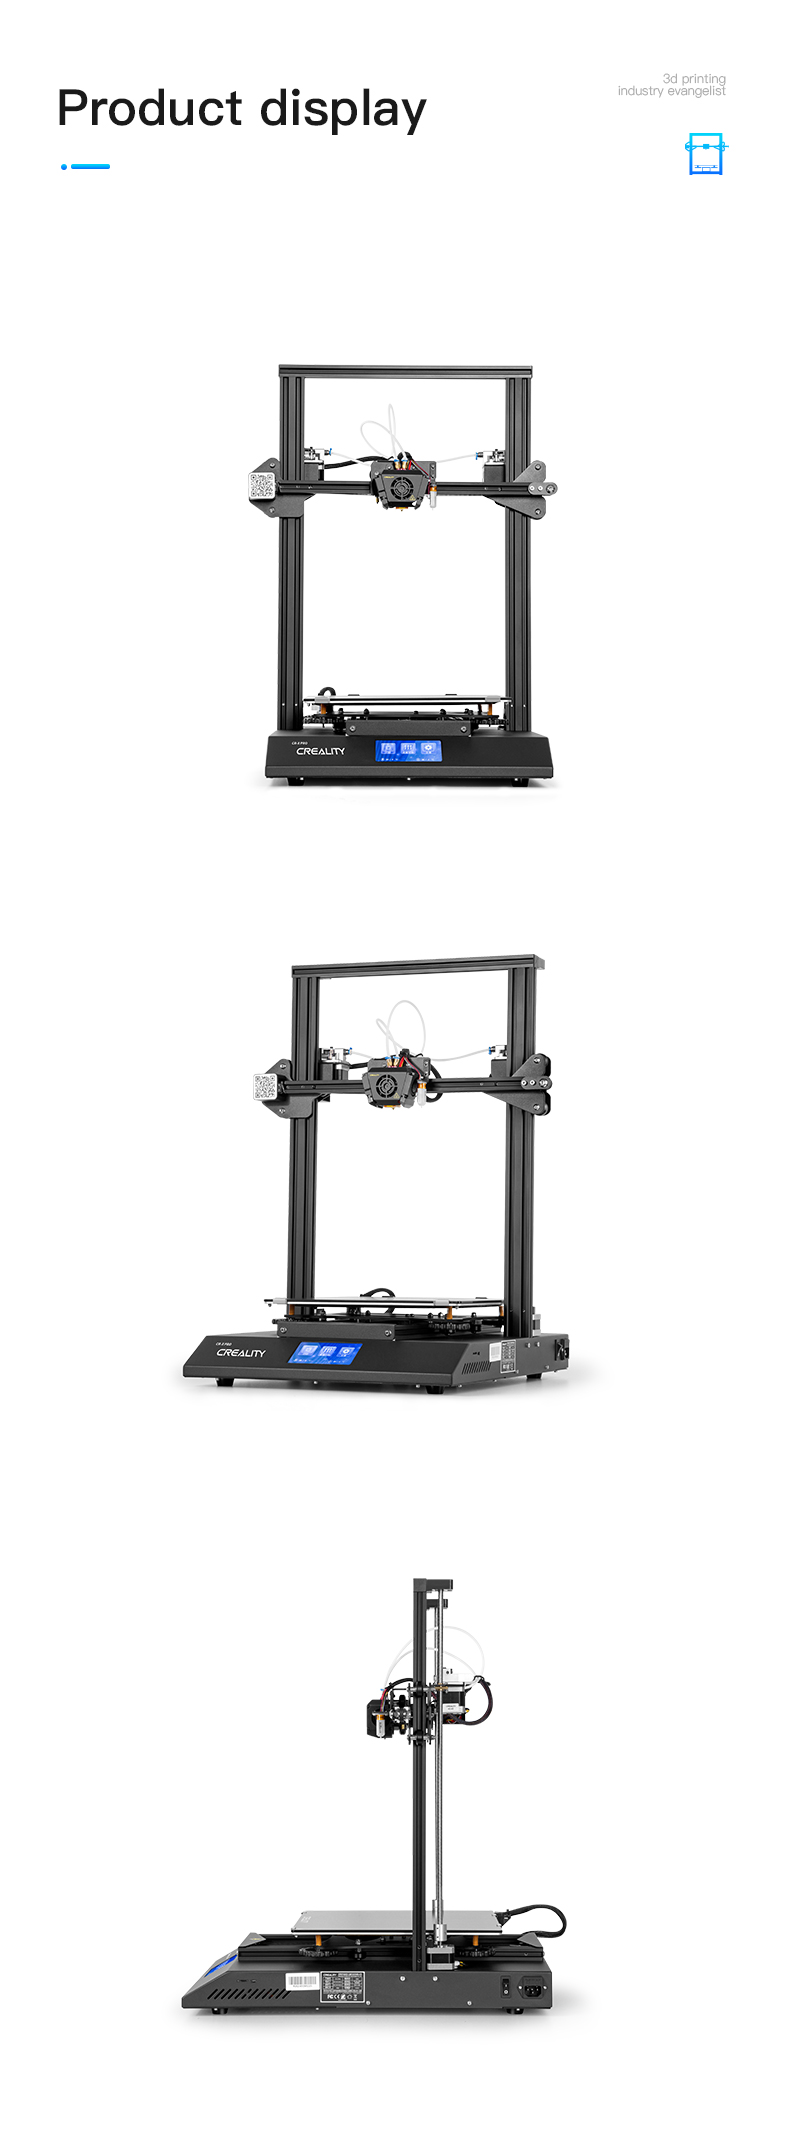 Creality CR-X Pro 3D Printer